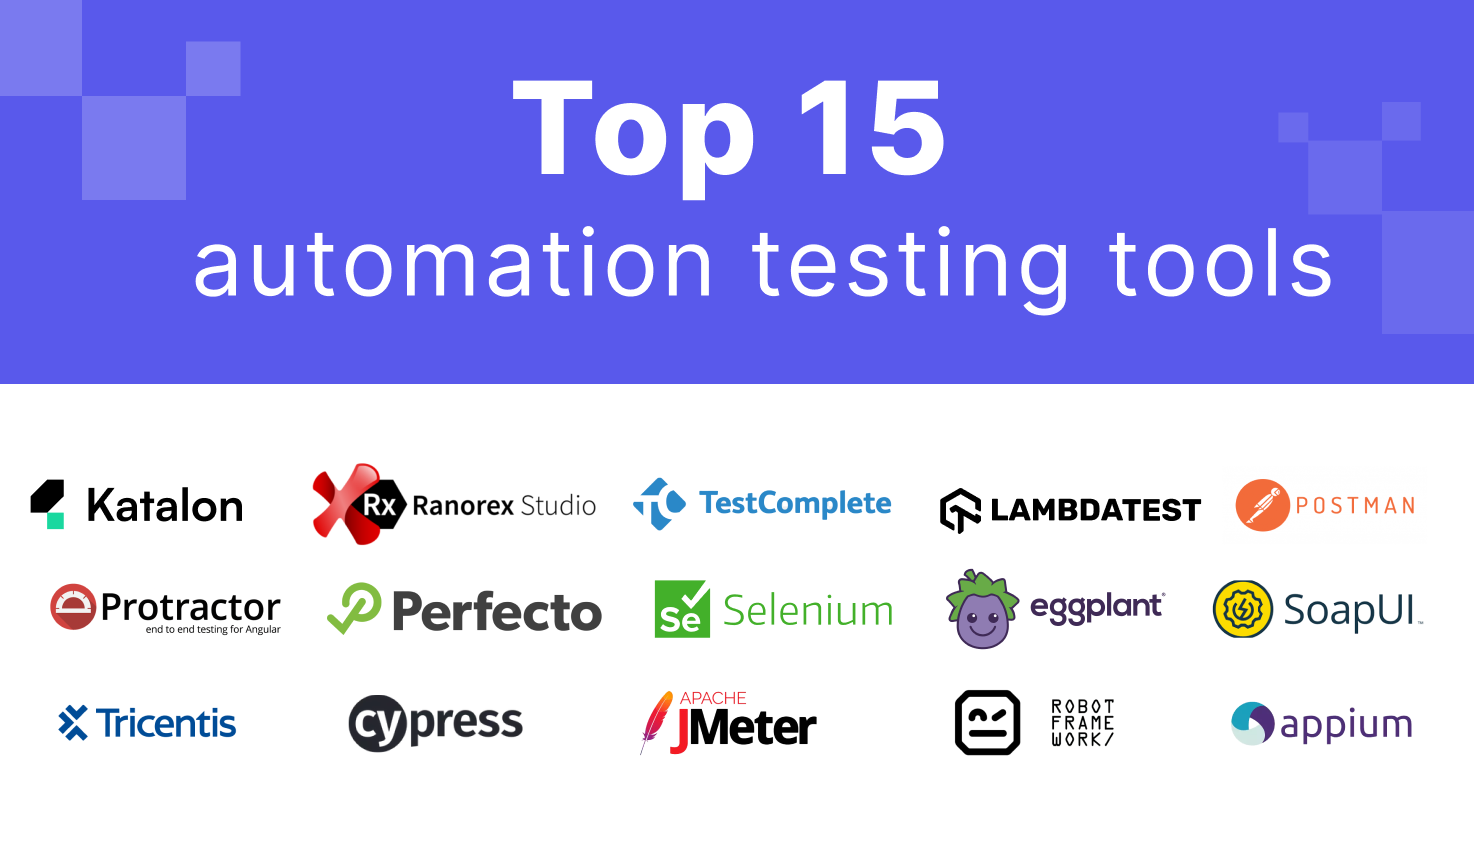 Top 15 automation testing tools | Katalon